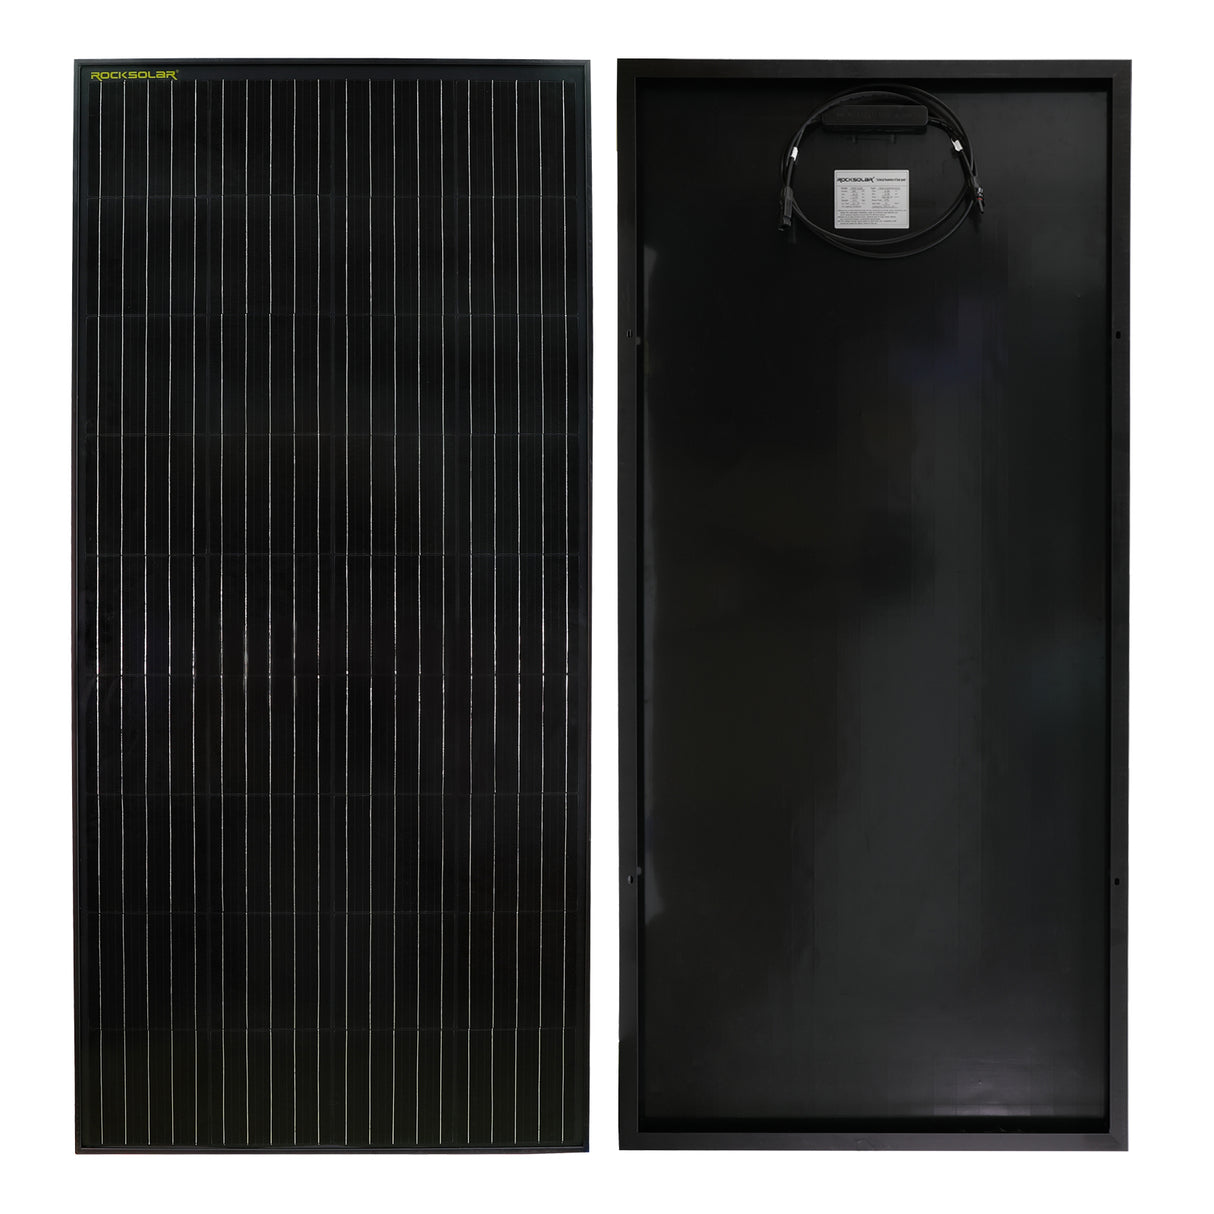 ROCKSOLAR 200W 12V Rigid Monocrystalline Solar Panel - Waterproof with Corrosion-Resistant Aluminum Alloy Frame